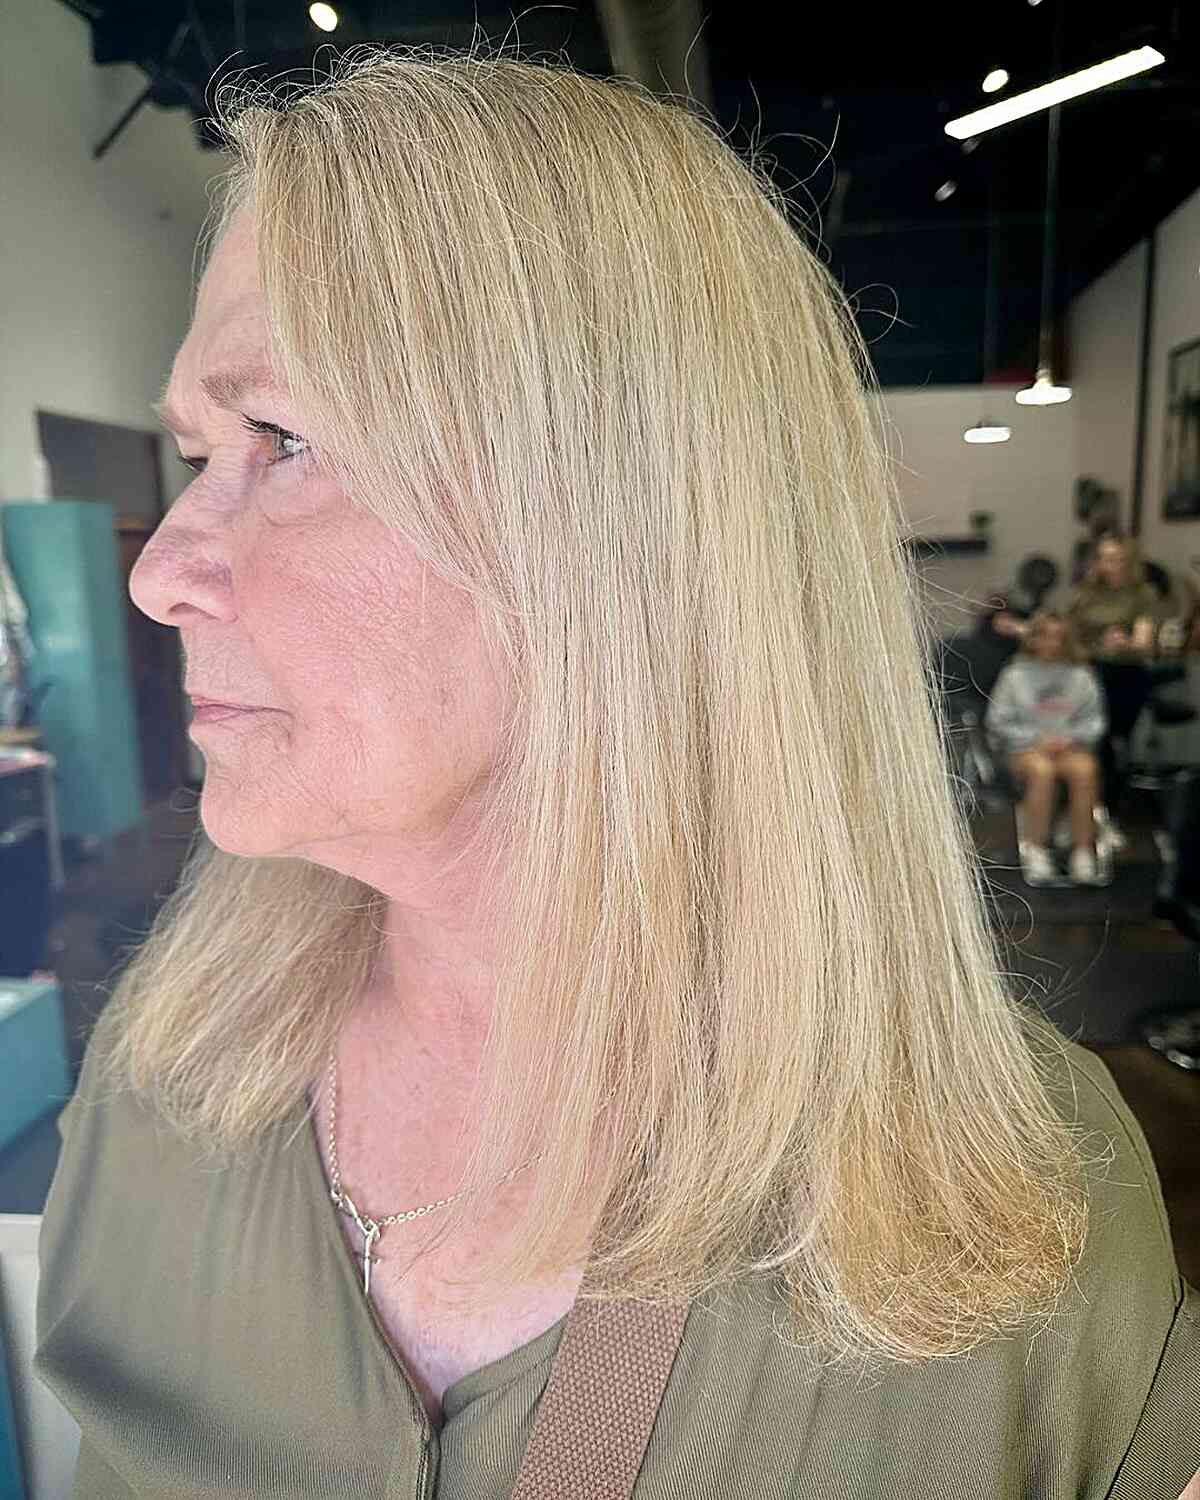 Medium-Length Blonde Coarse Thick Hair for Older Women Over 60